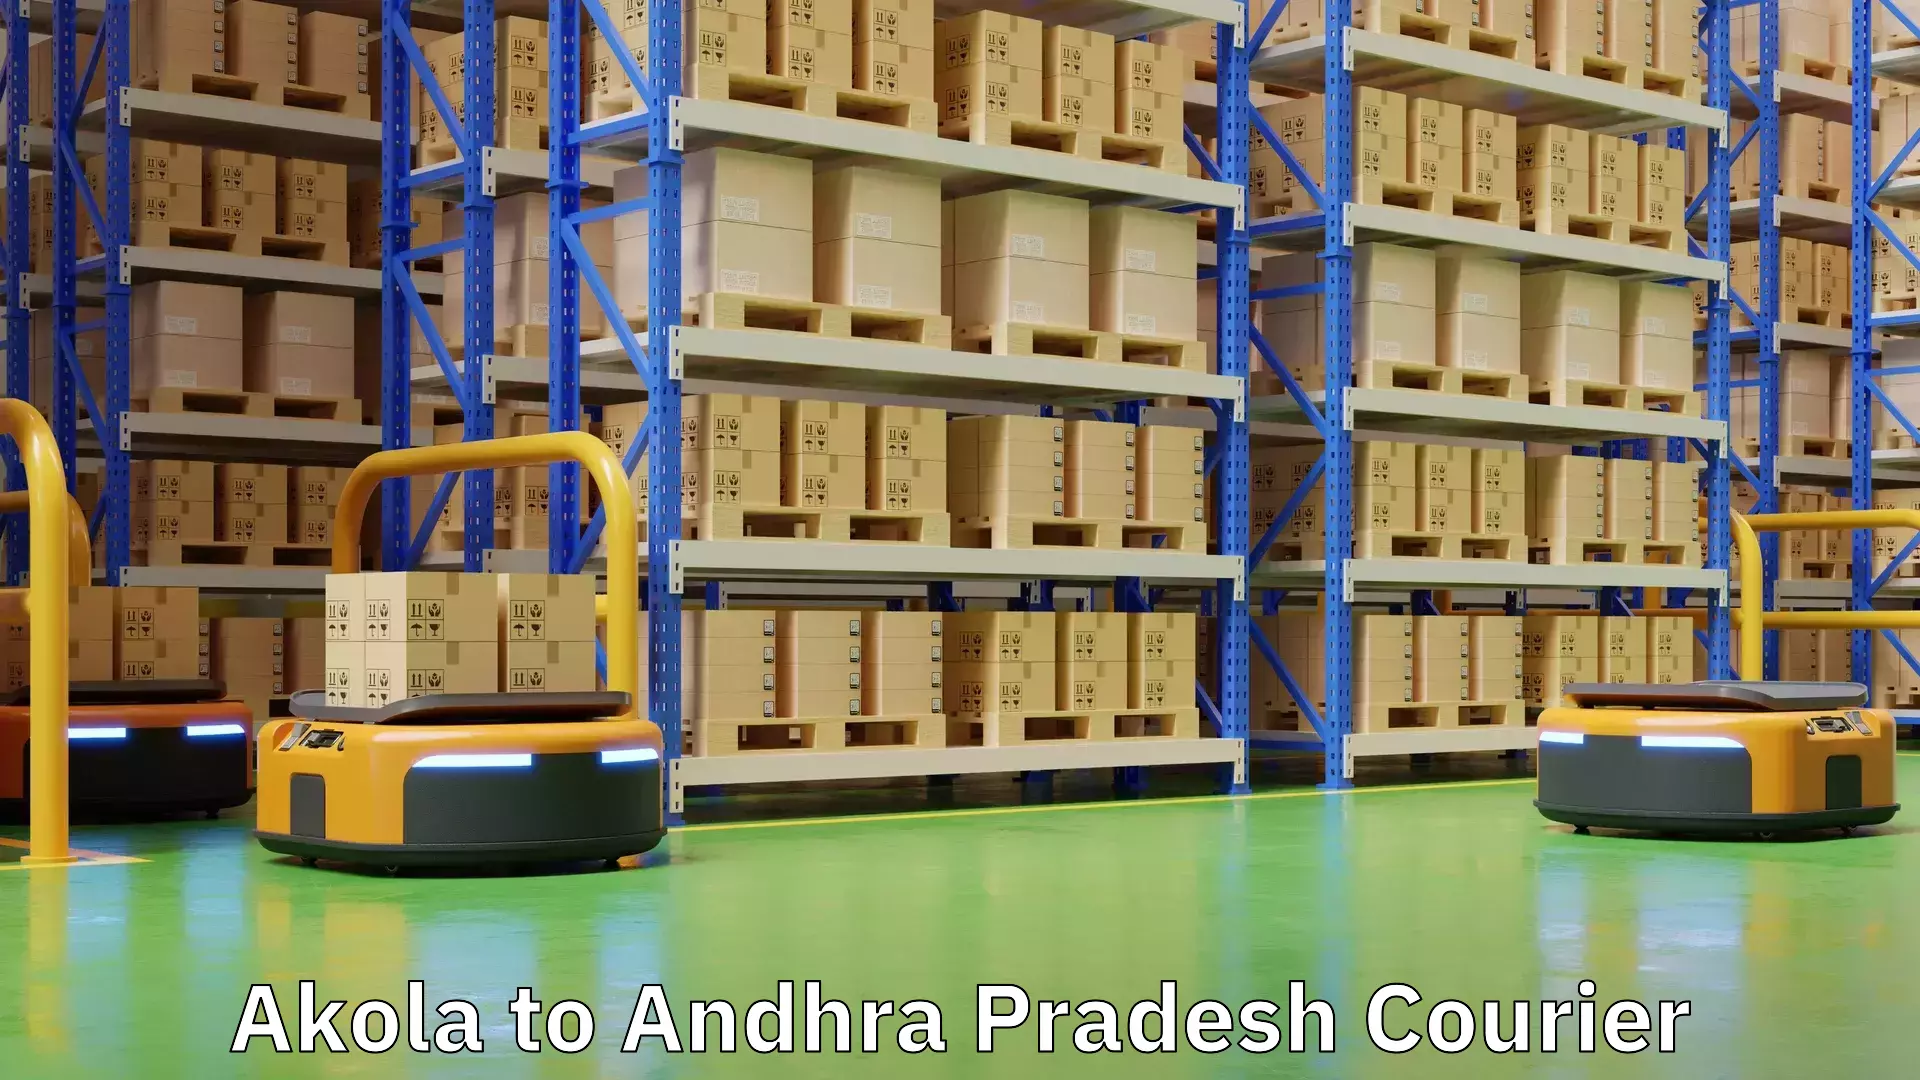 Global logistics network Akola to Andhra Pradesh